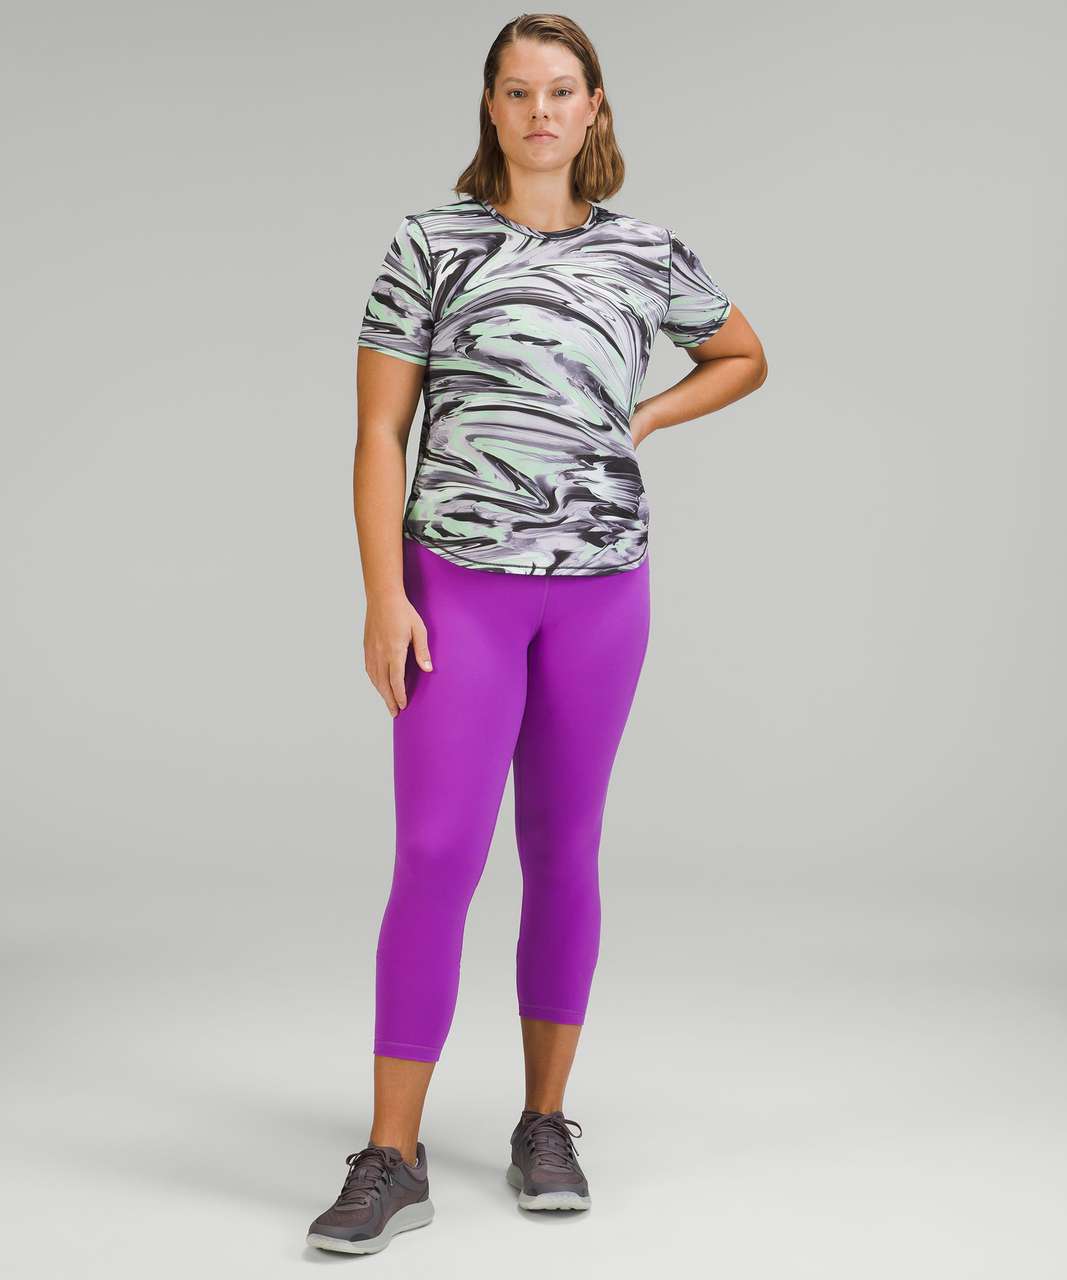 Lululemon High-Neck Running and Training T-Shirt - Paint Glide Warp Multi